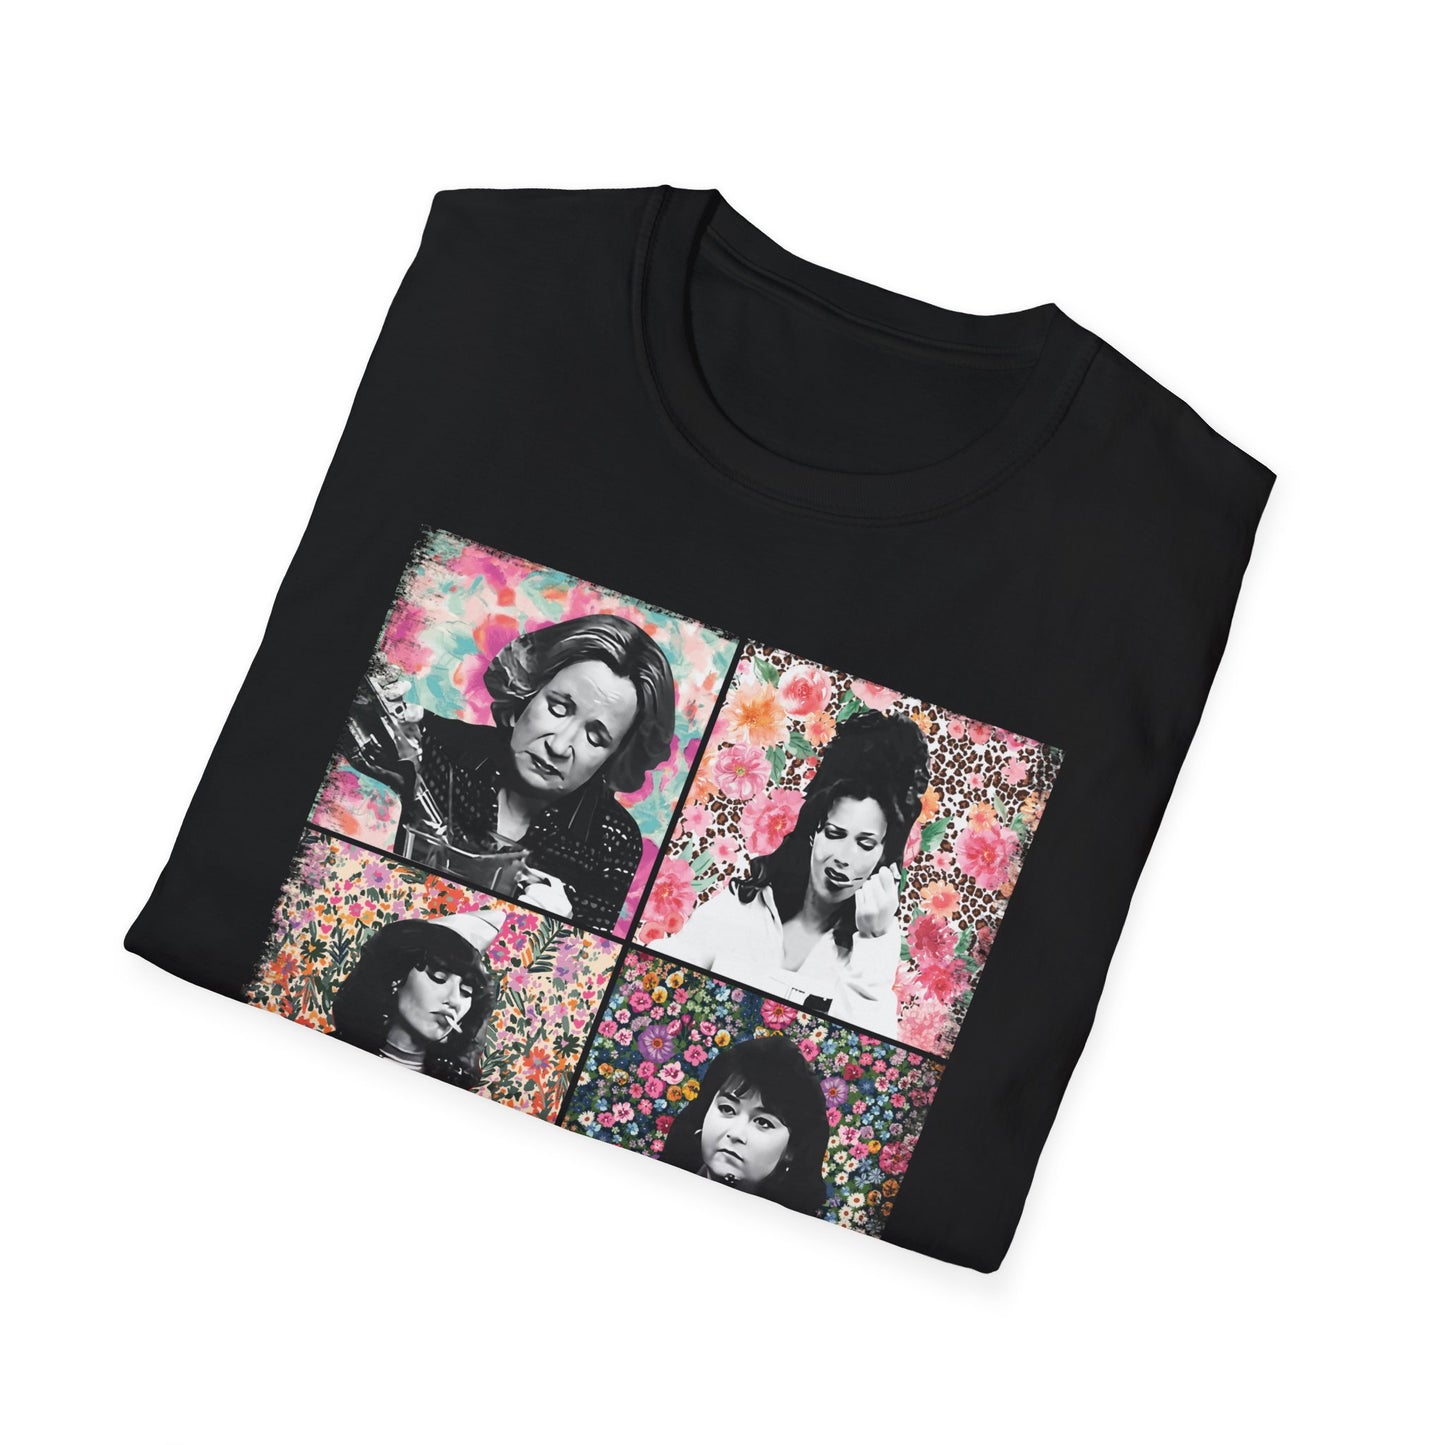 Mom Vibes - Unisex Softstyle T-Shirt